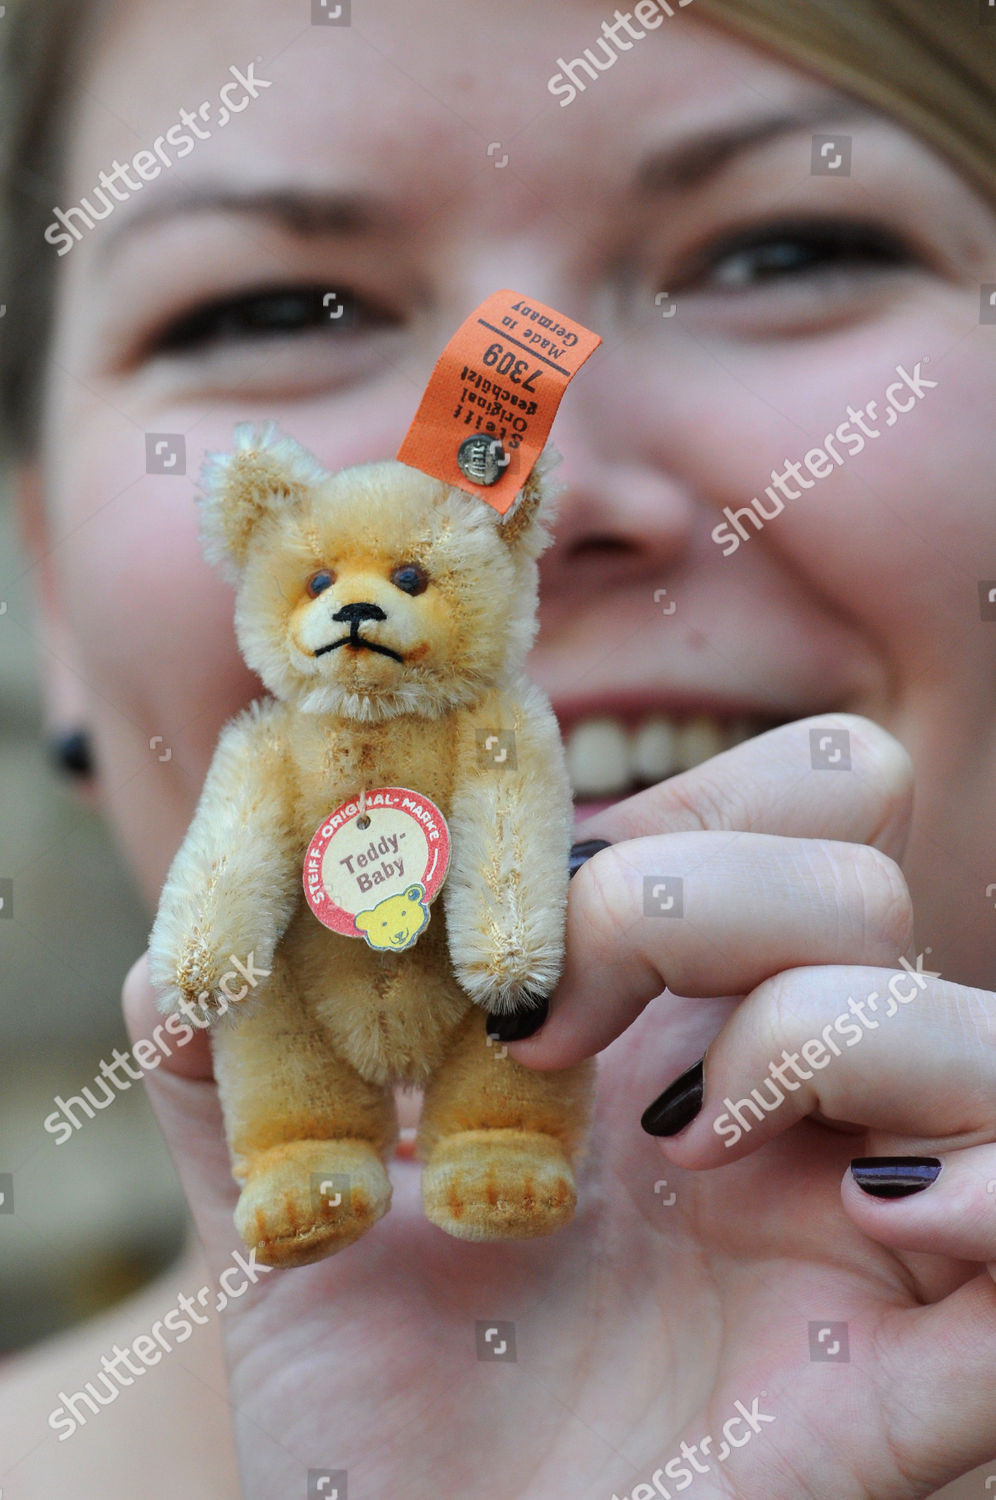 miniature bears for sale